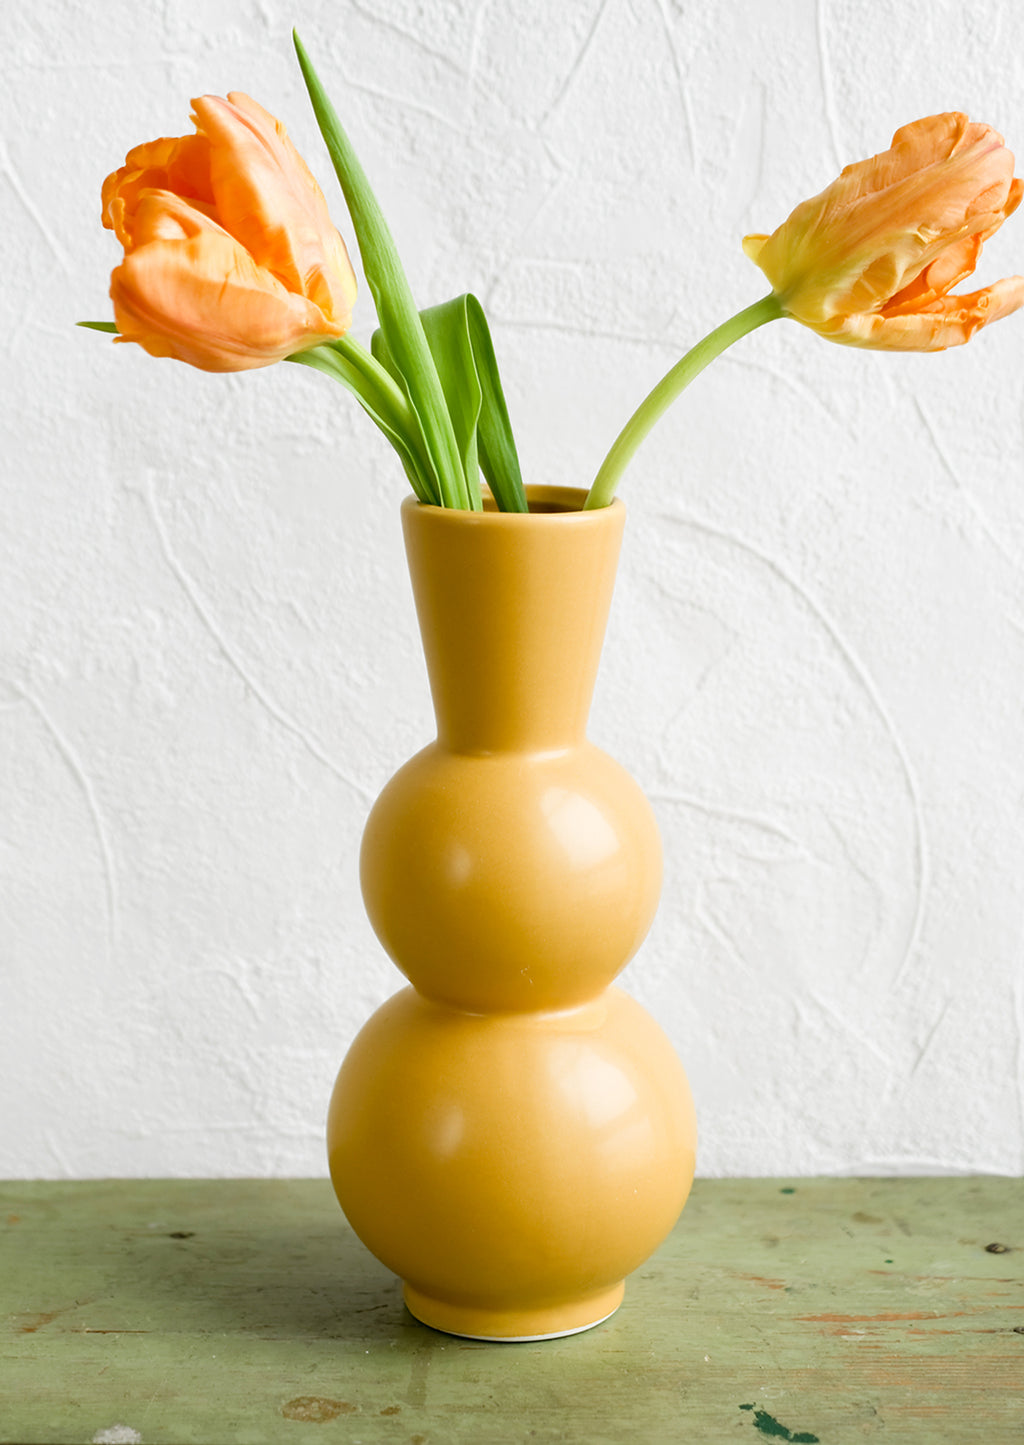 2: A yellow ceramic vase with orange tulips.